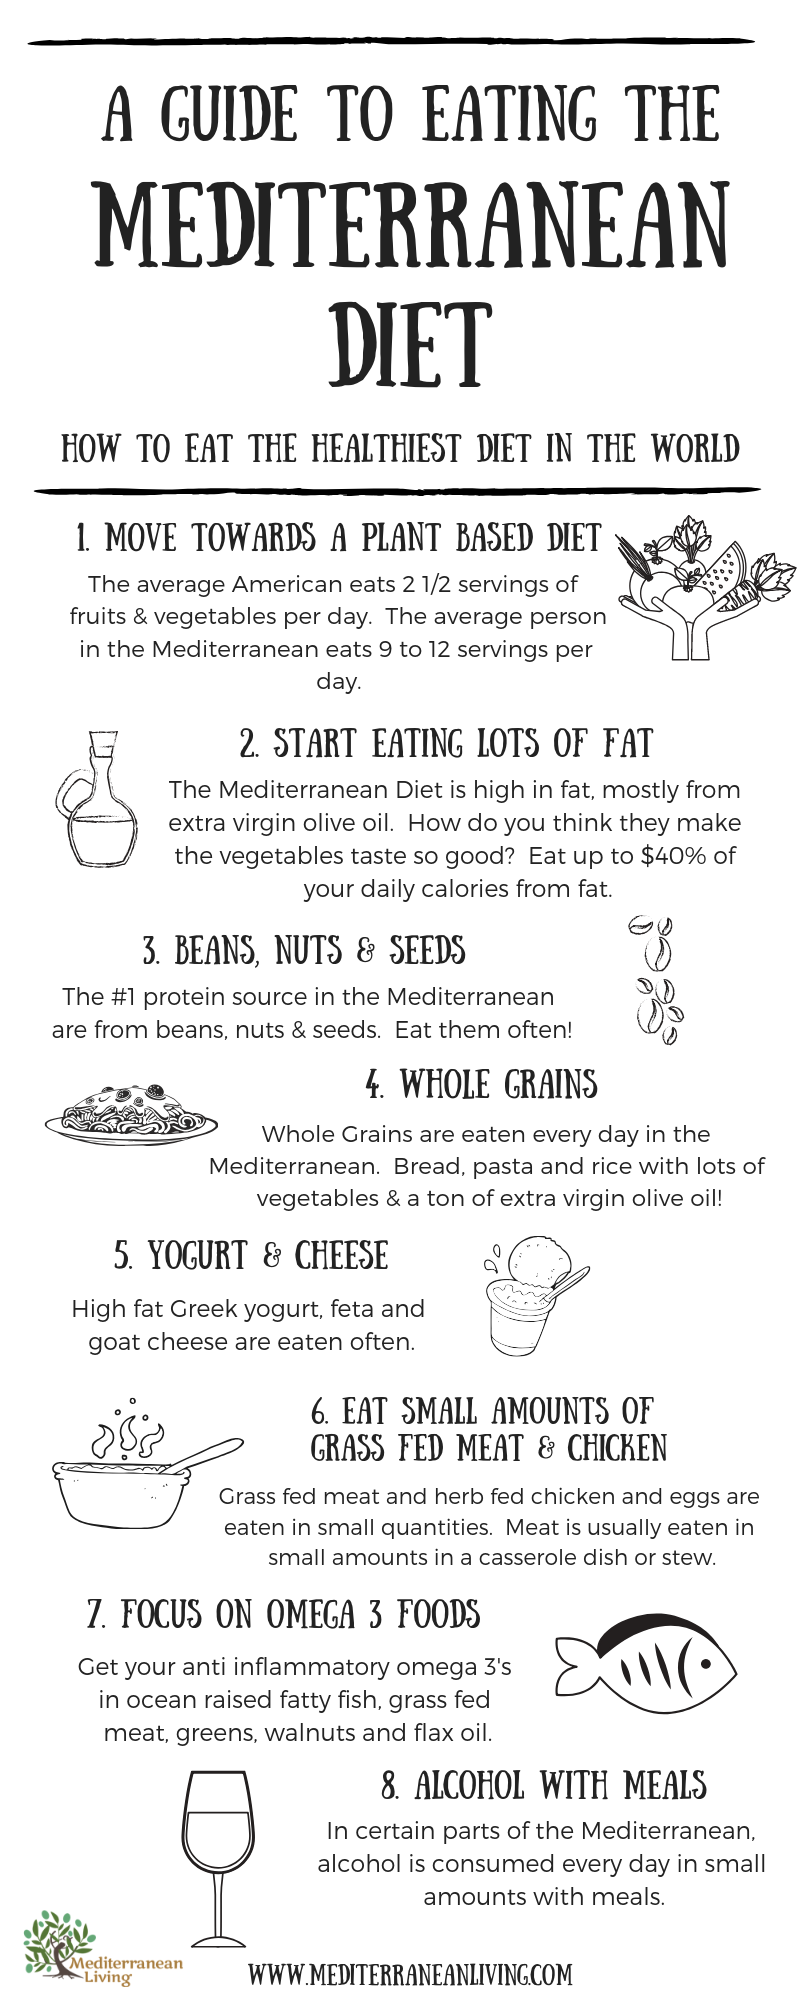 5. Mediterranean Diet and Weight Loss